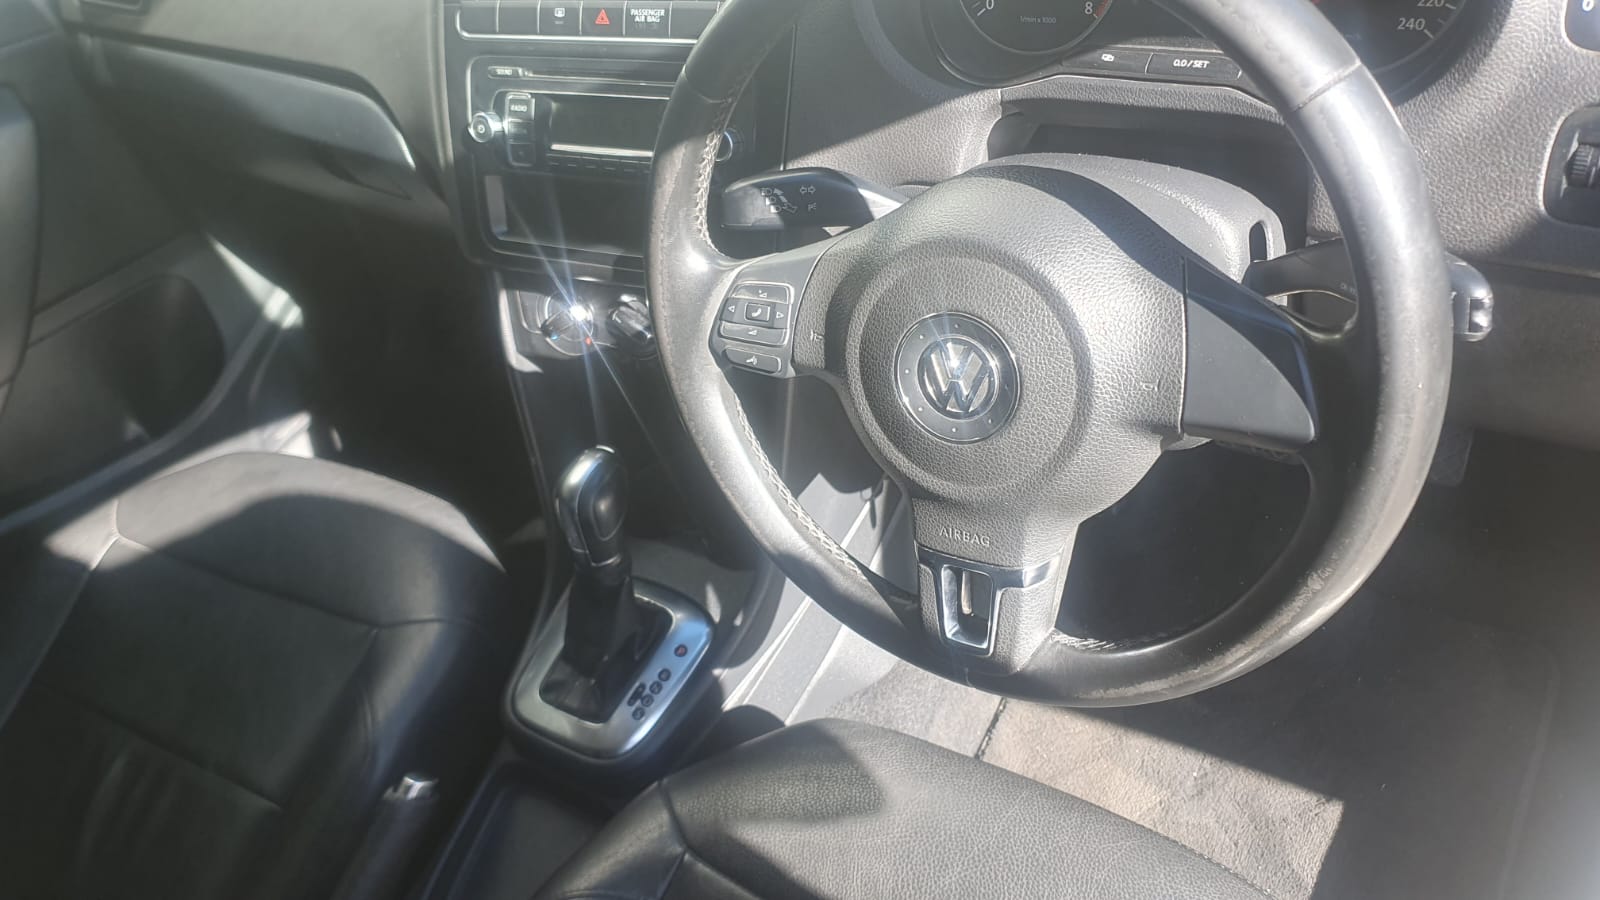 VW Polo 1.6 automatic 2013 model